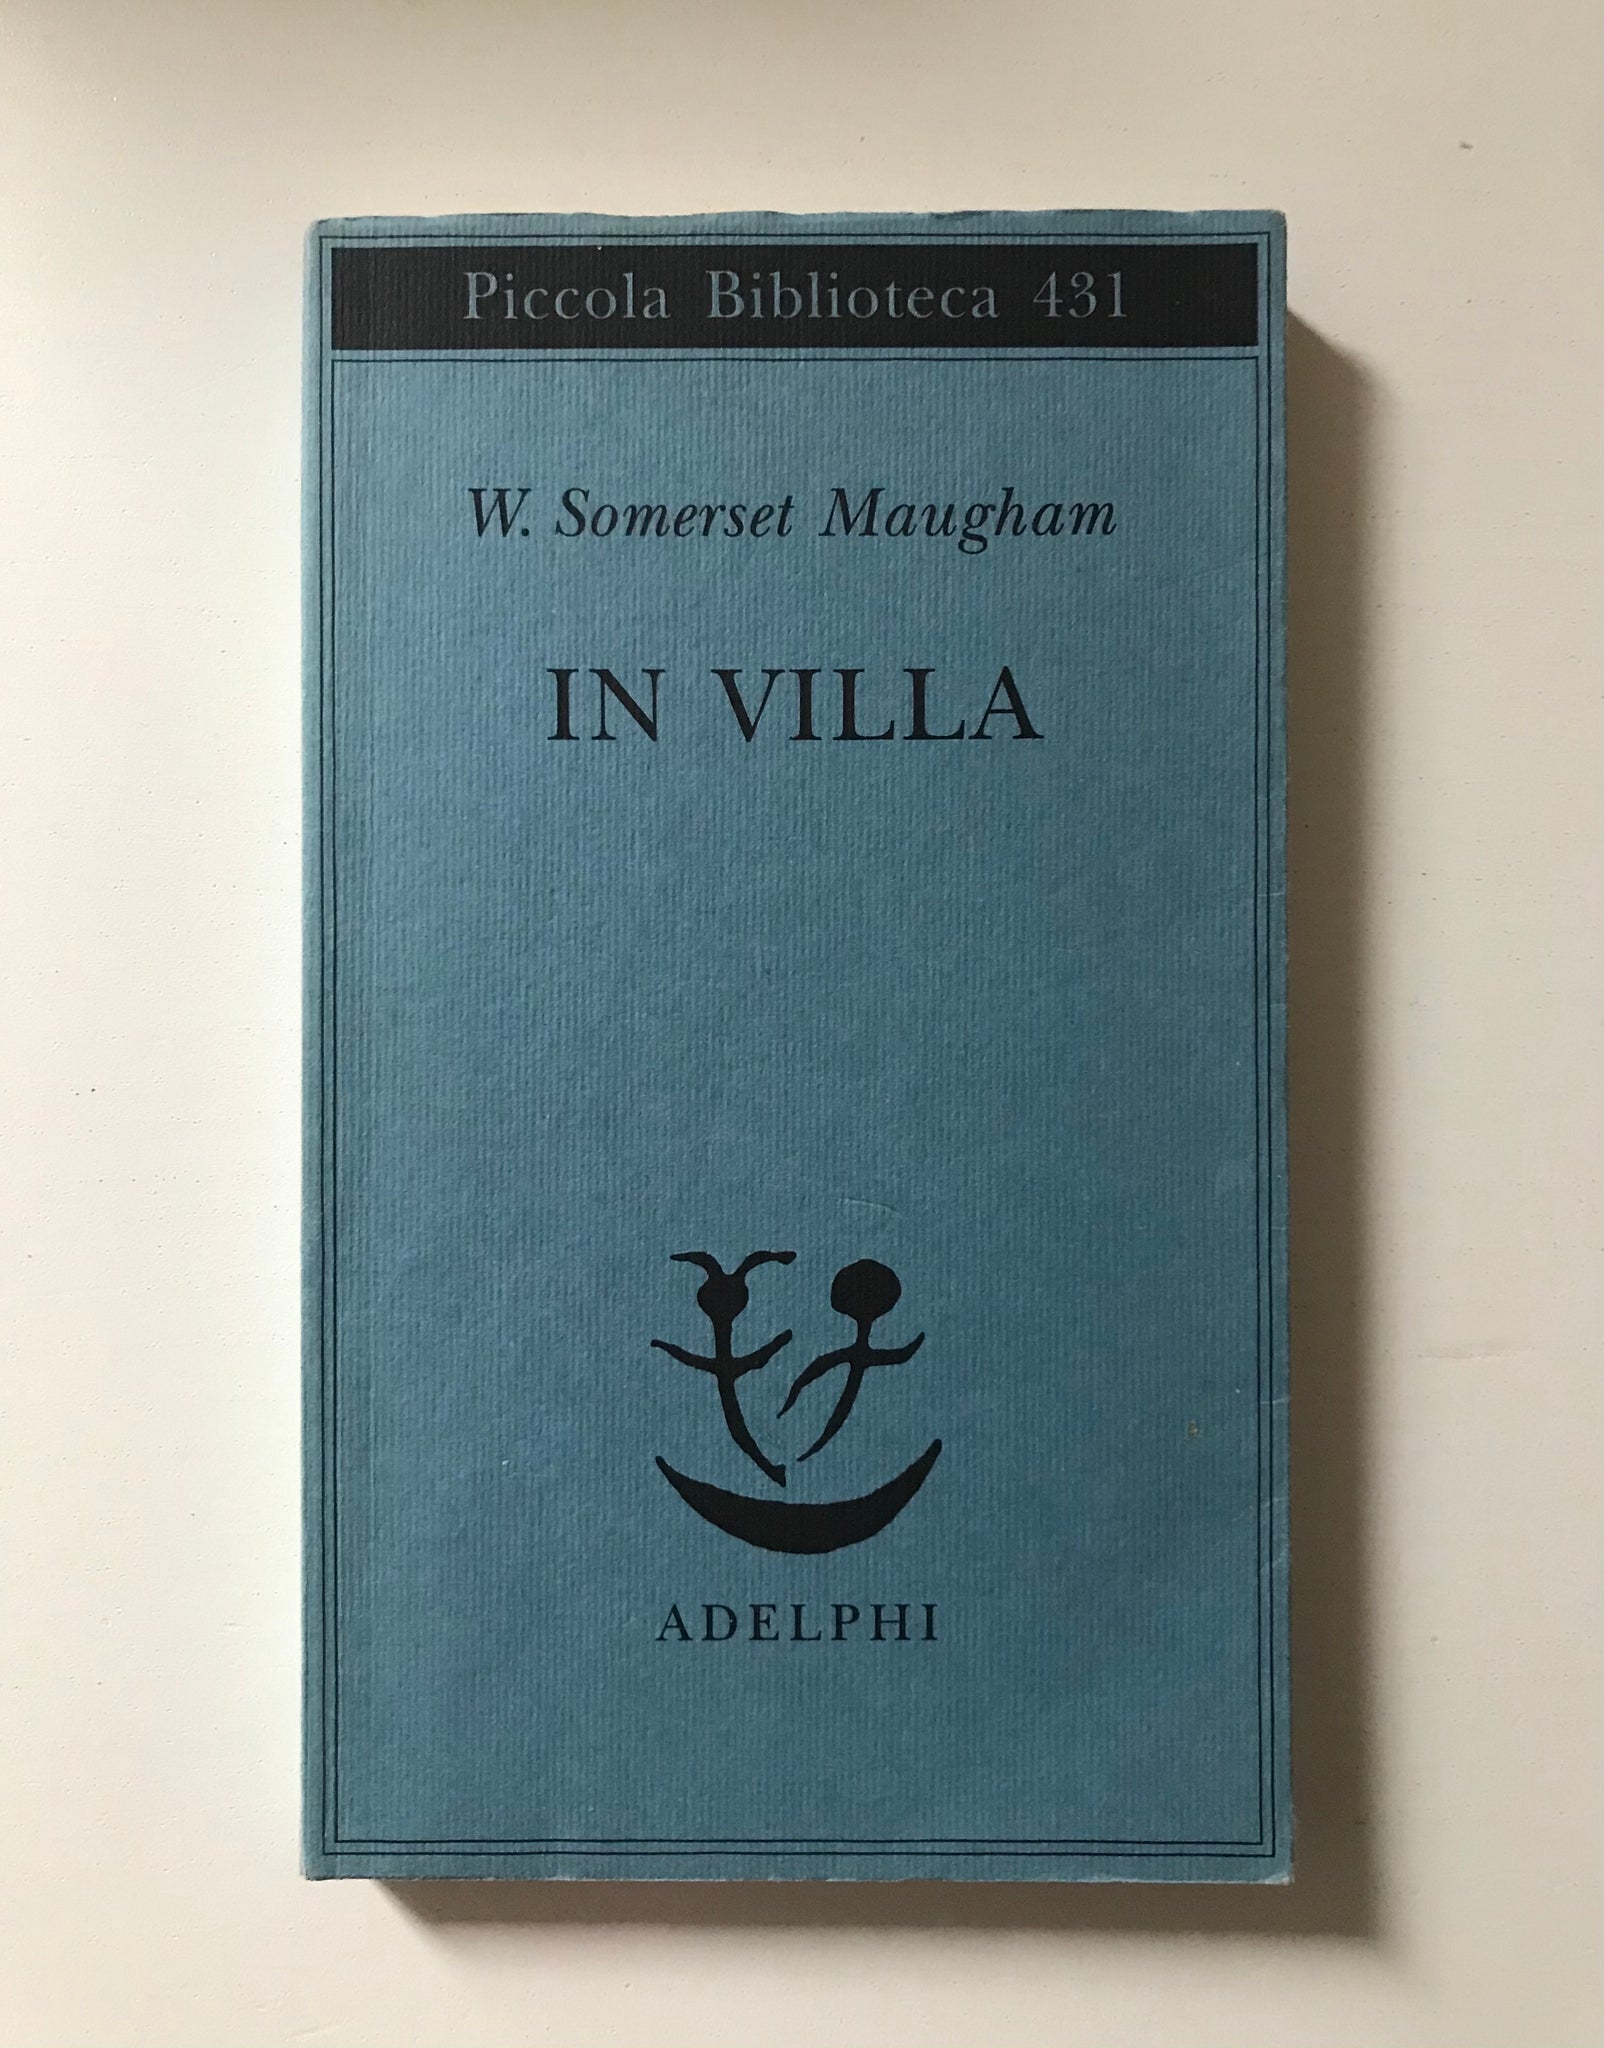 William Somerset Maugham - In villa